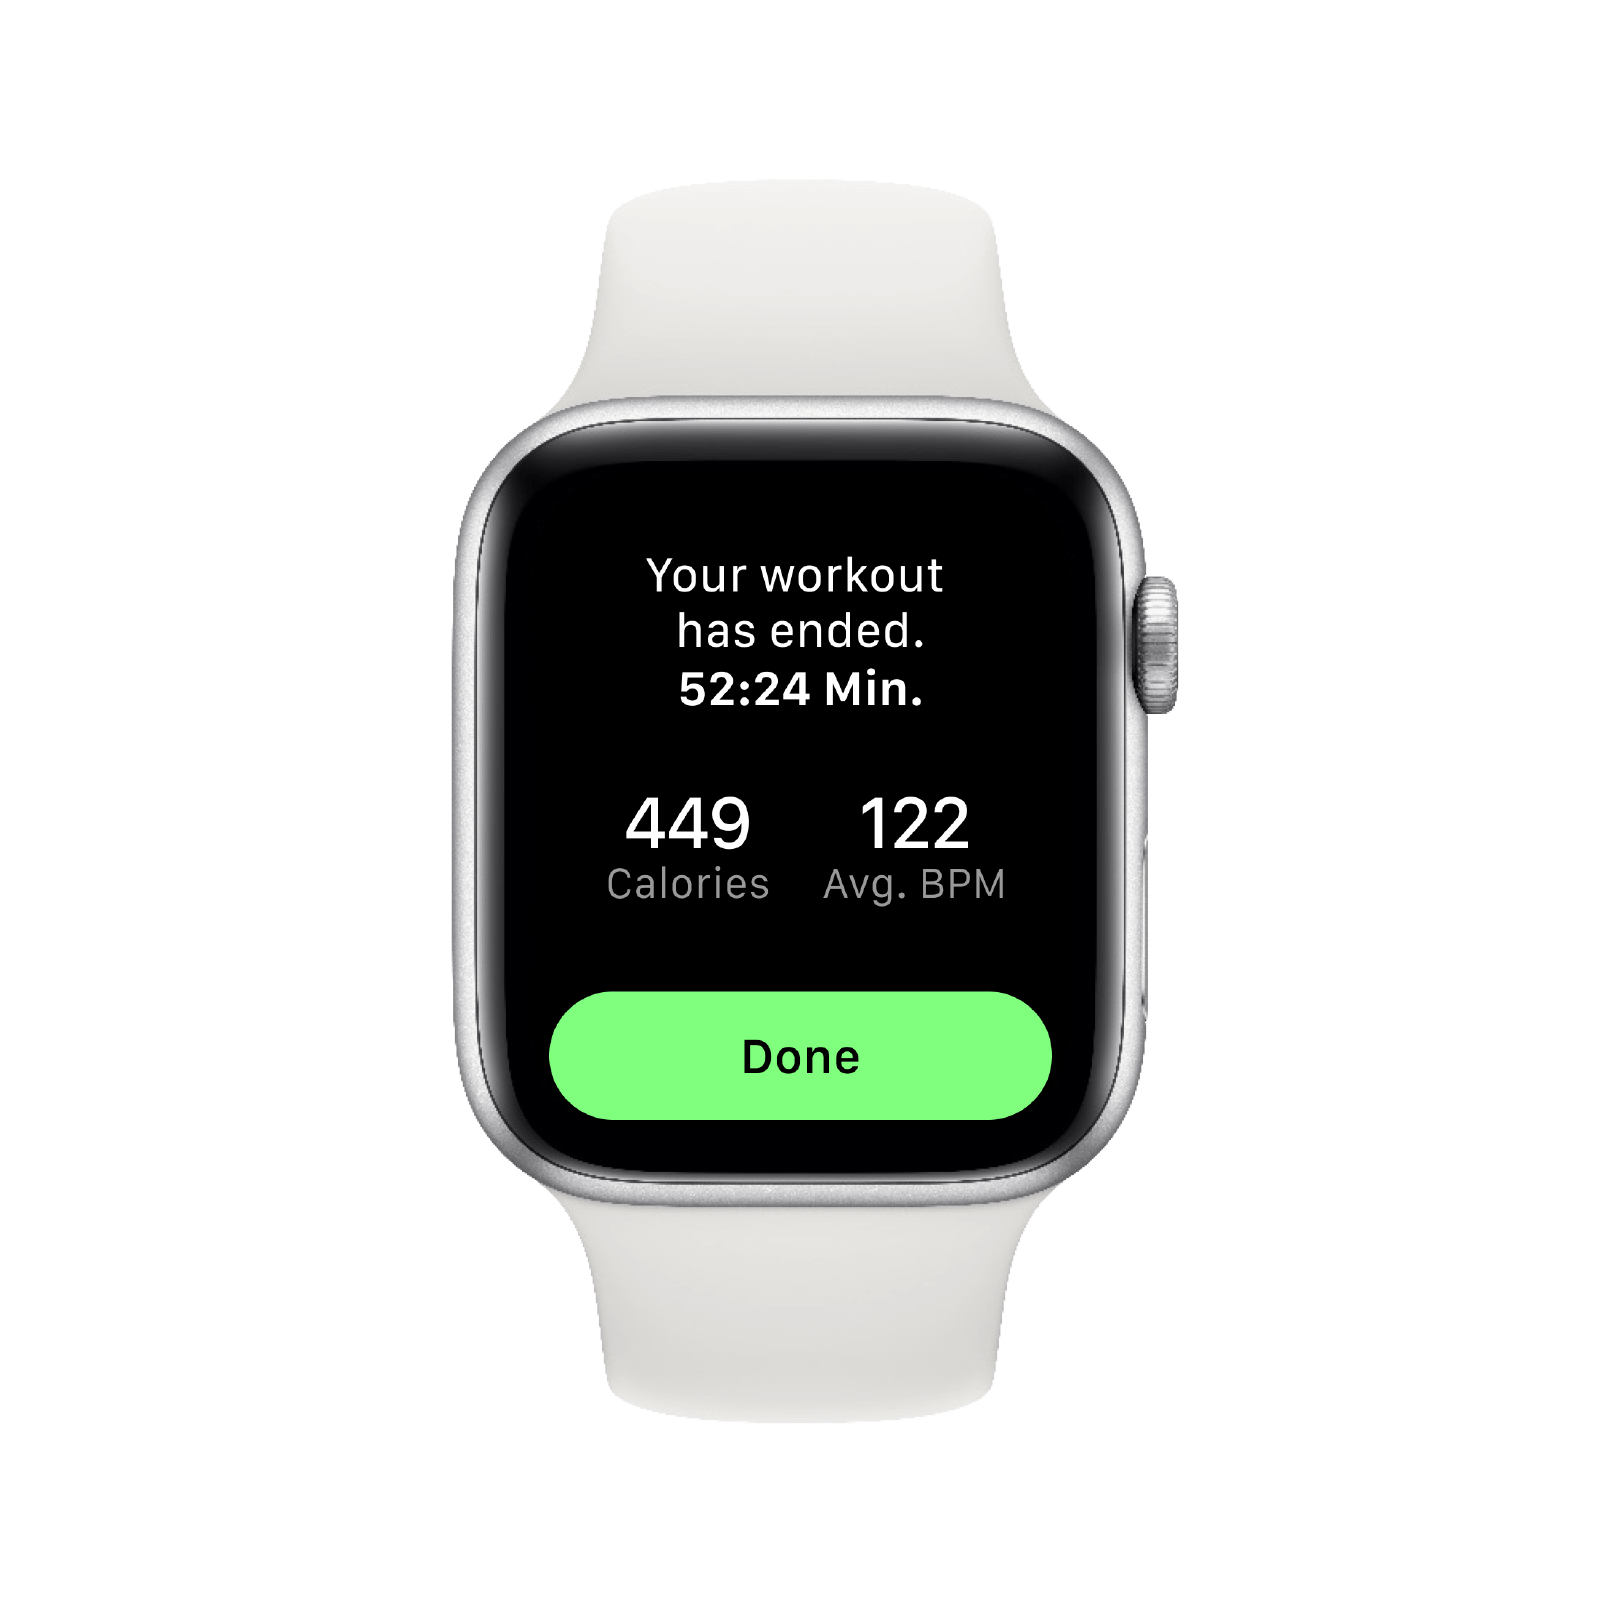 Apple watch displaying workout information